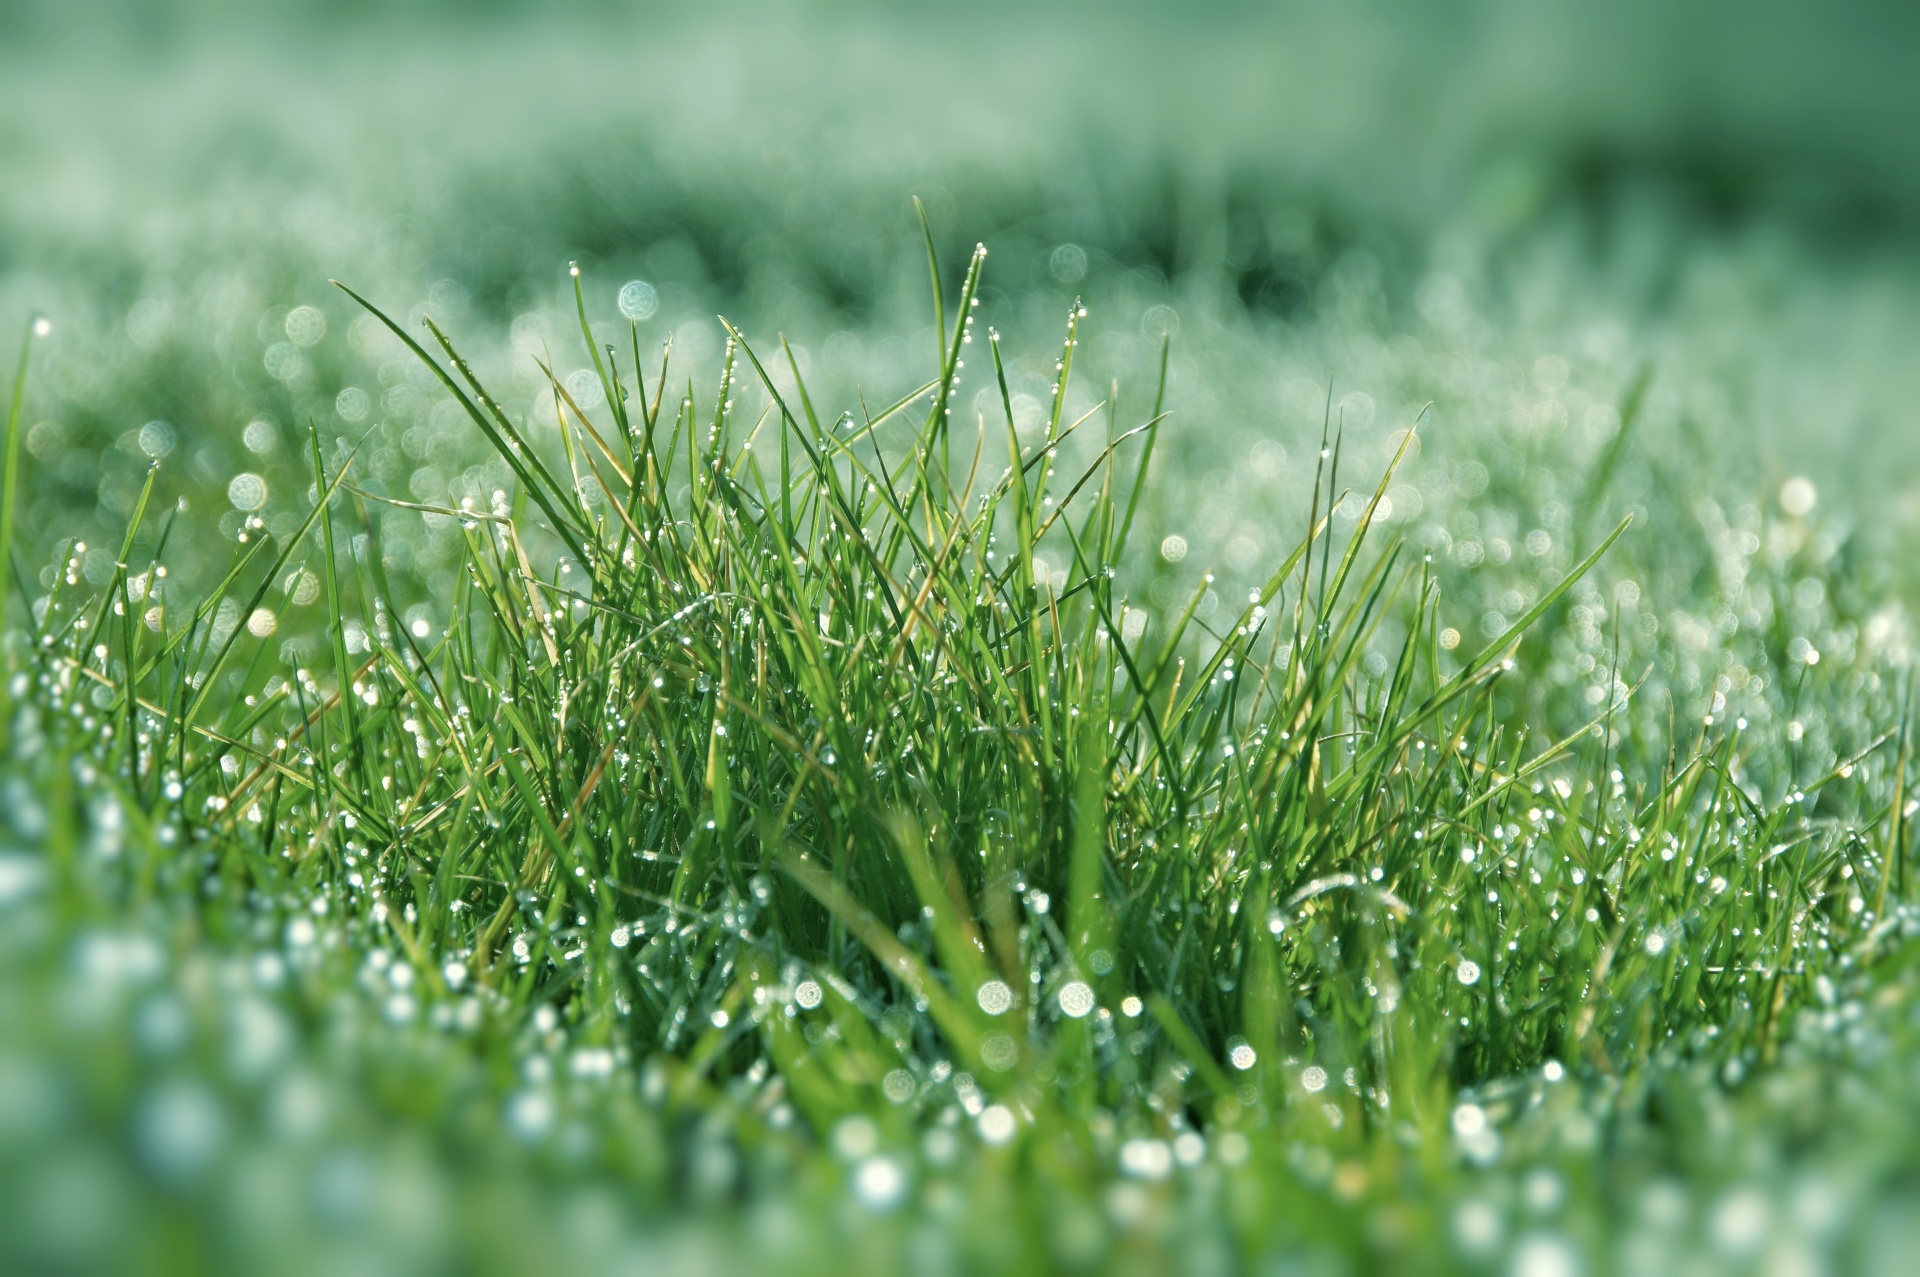 Grass lawn plants grasses green dew drops of water nature meadow hoarfrost frosty